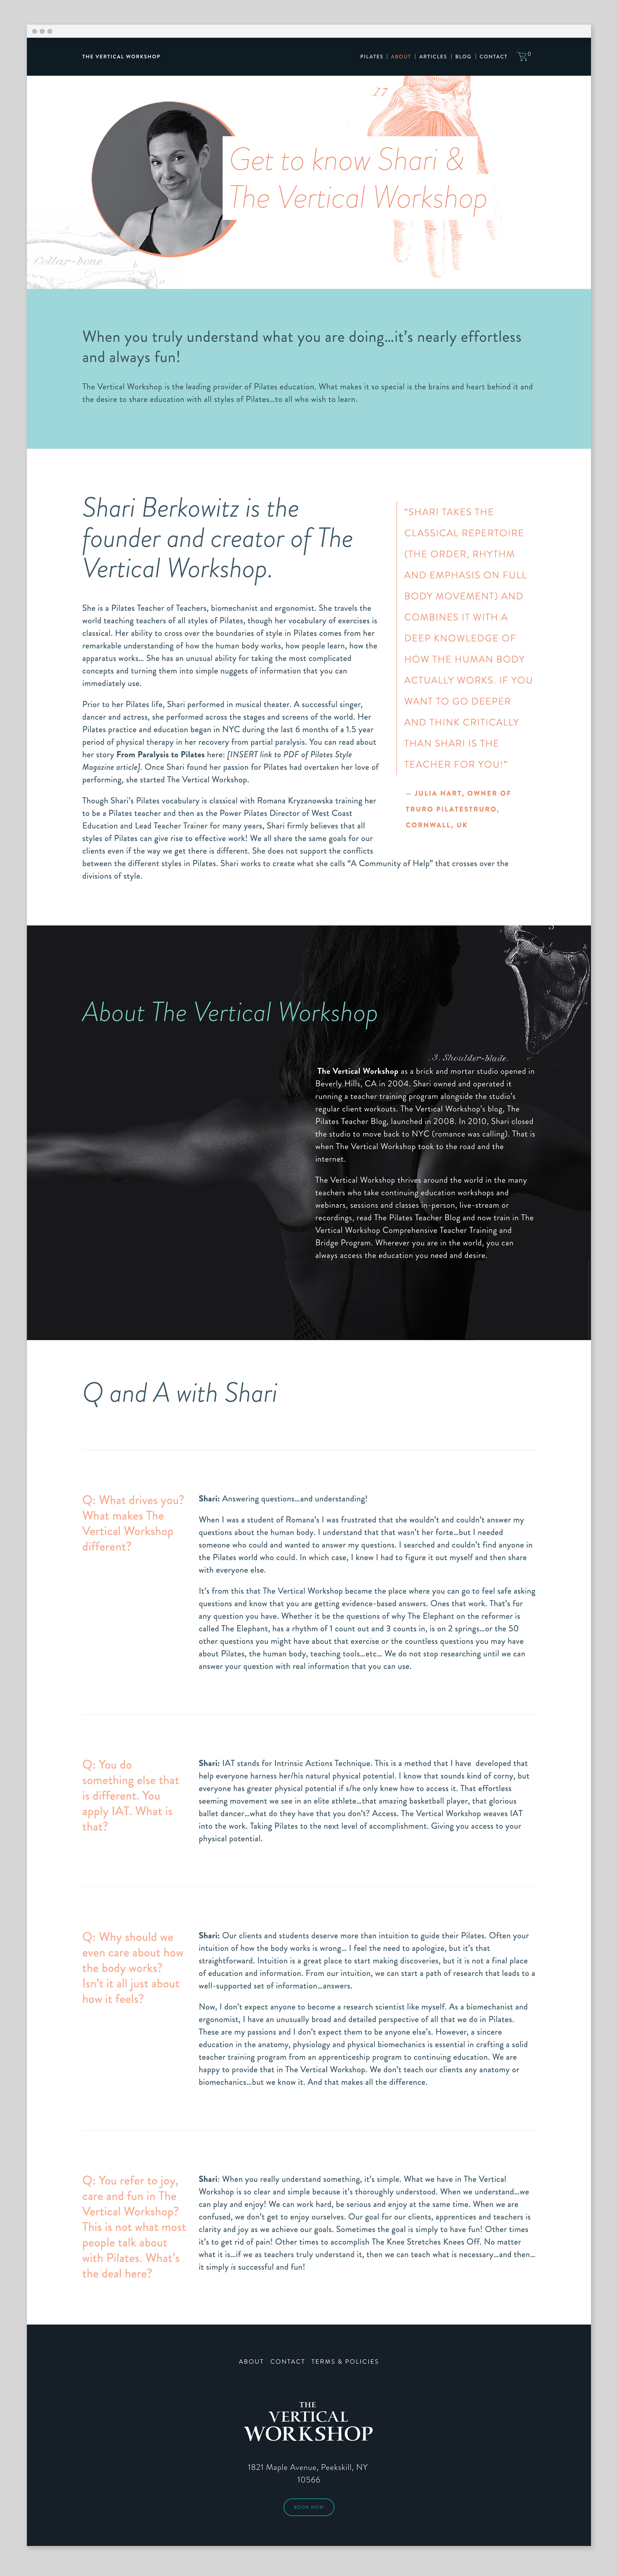 The Vertical Workshop Website Design About Page